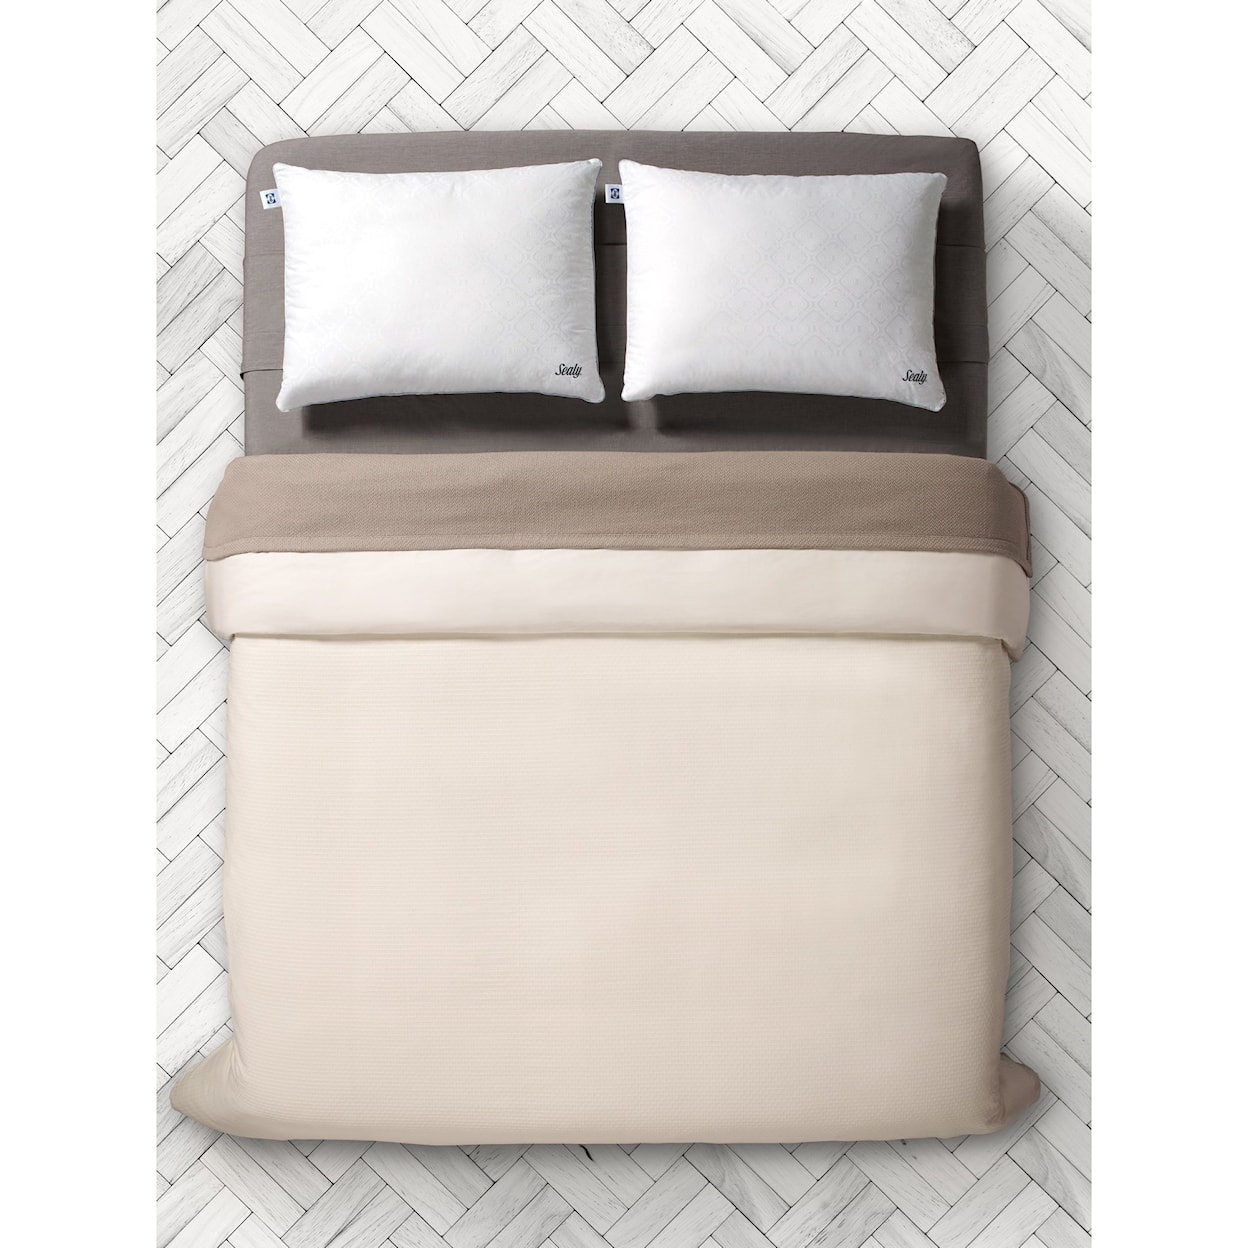 Sealy Conform Pillow Conform Multi-Comfort Bed Pillow